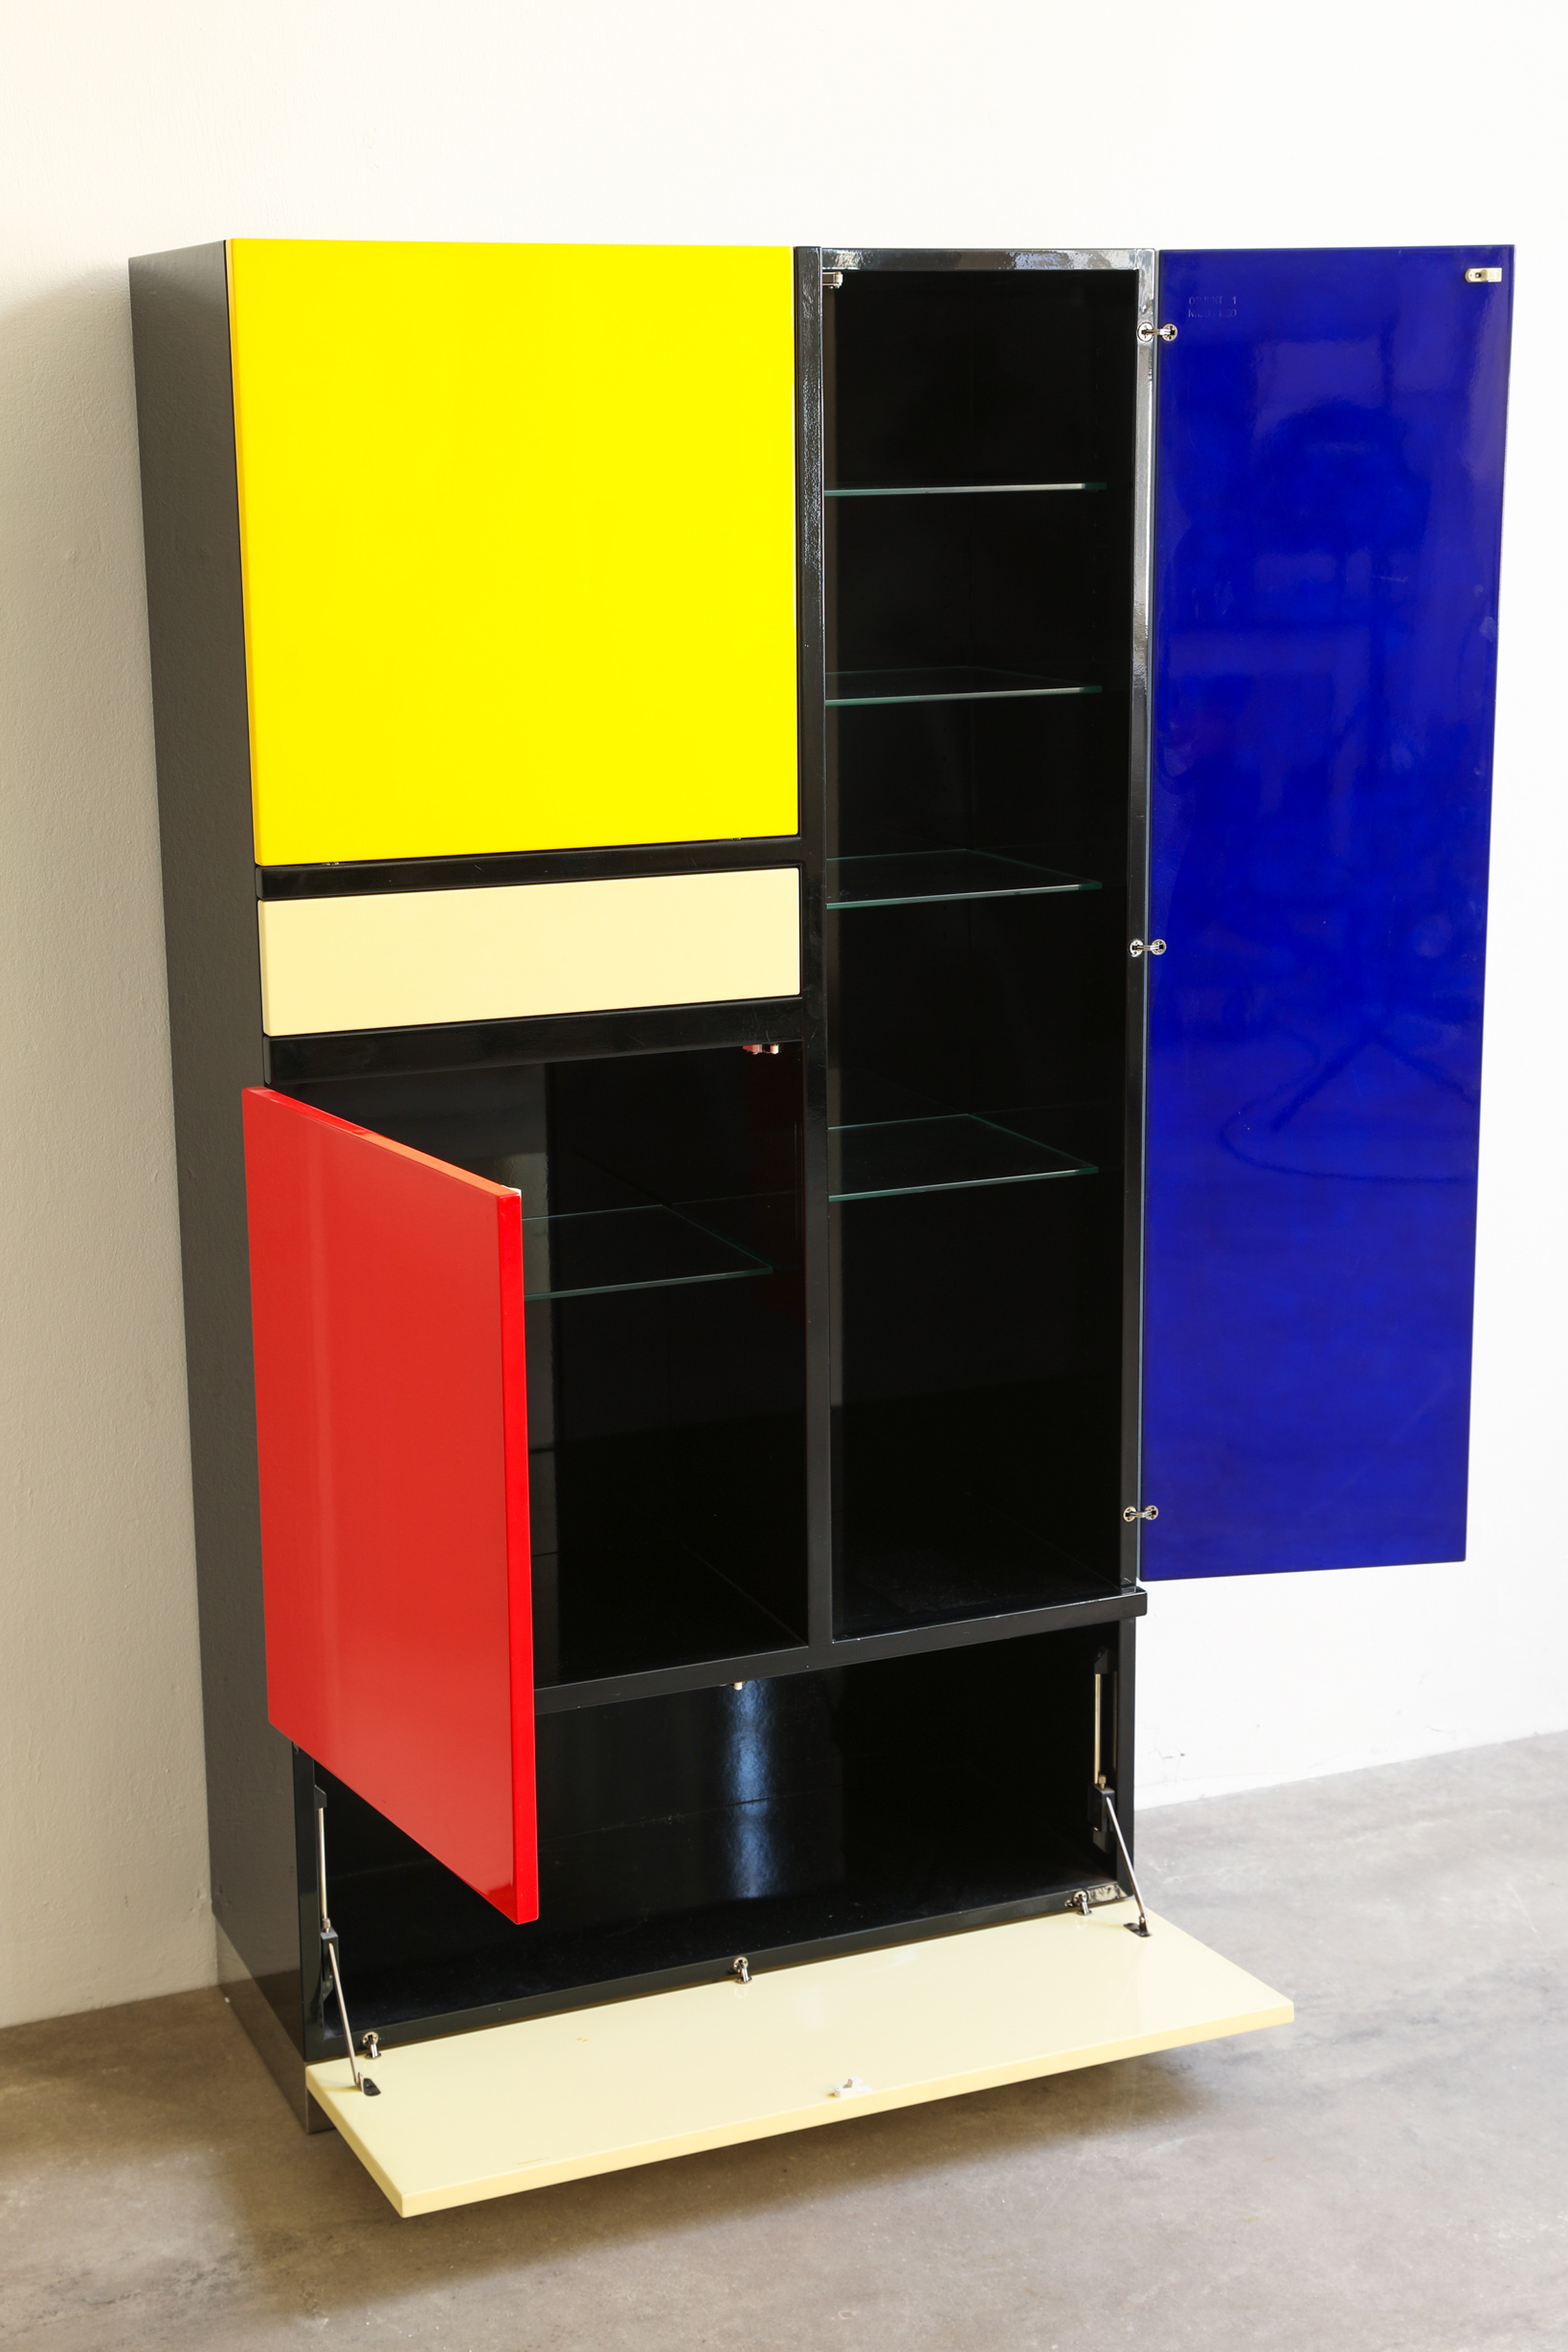 Koni Ochsner, Röthlisberger, Limited Cabinet, model Mondrian Schrank Object 1, No. 96, 1980 - Image 4 of 6